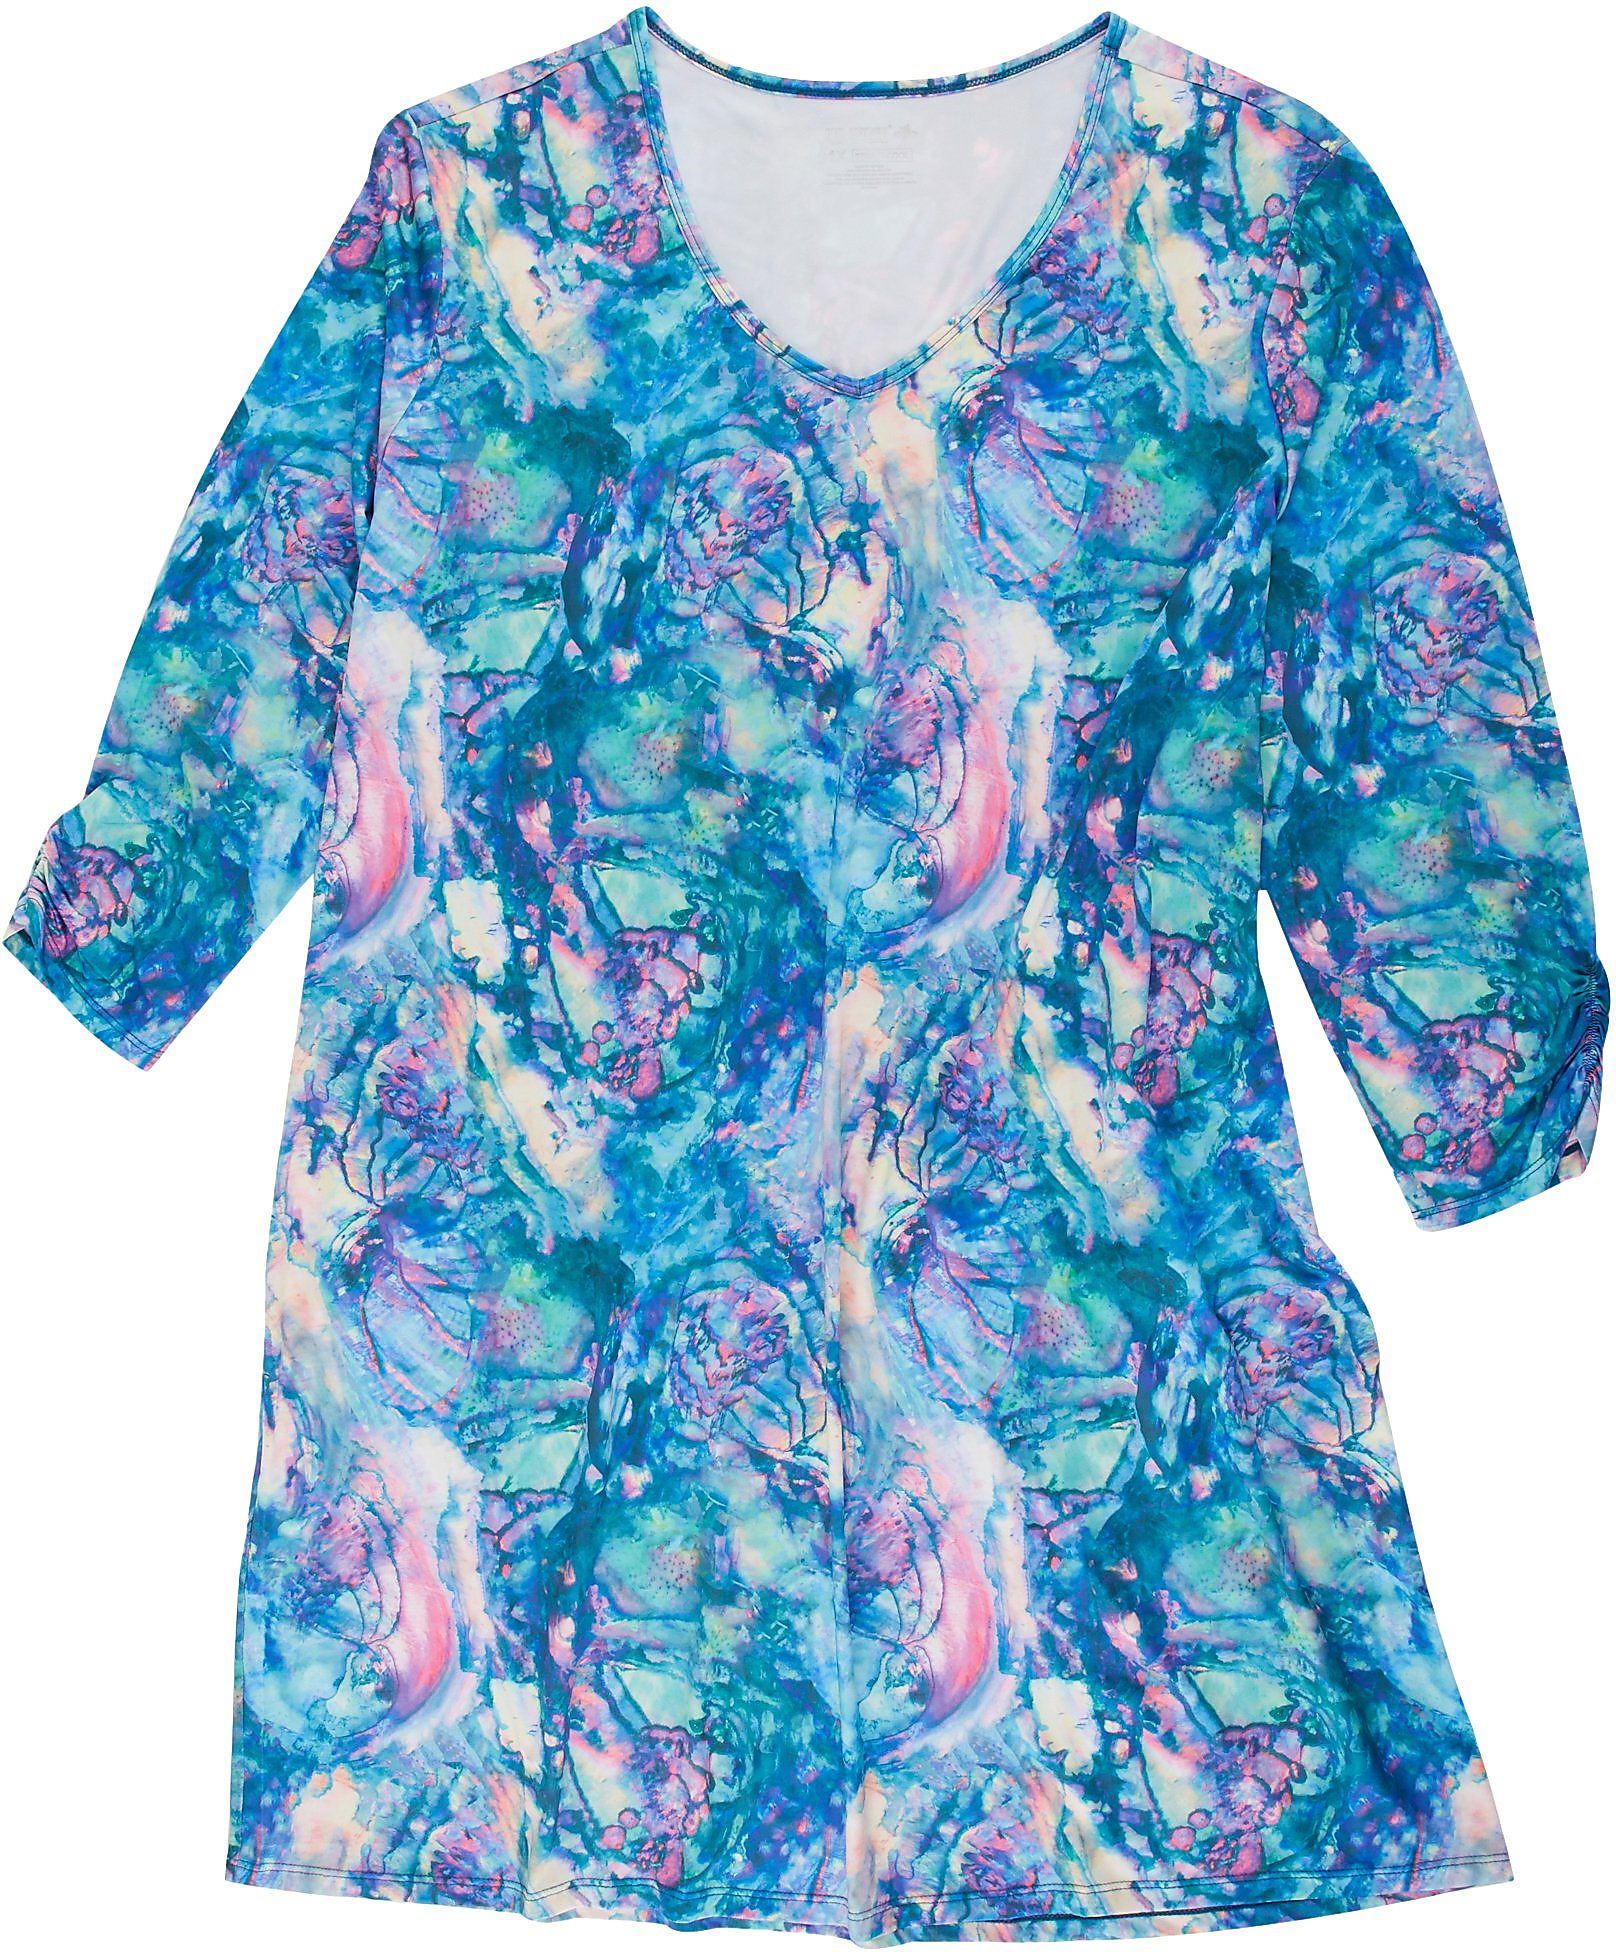 Reel Legends Plus Keep It Cool Abalone Print Dress | eBay